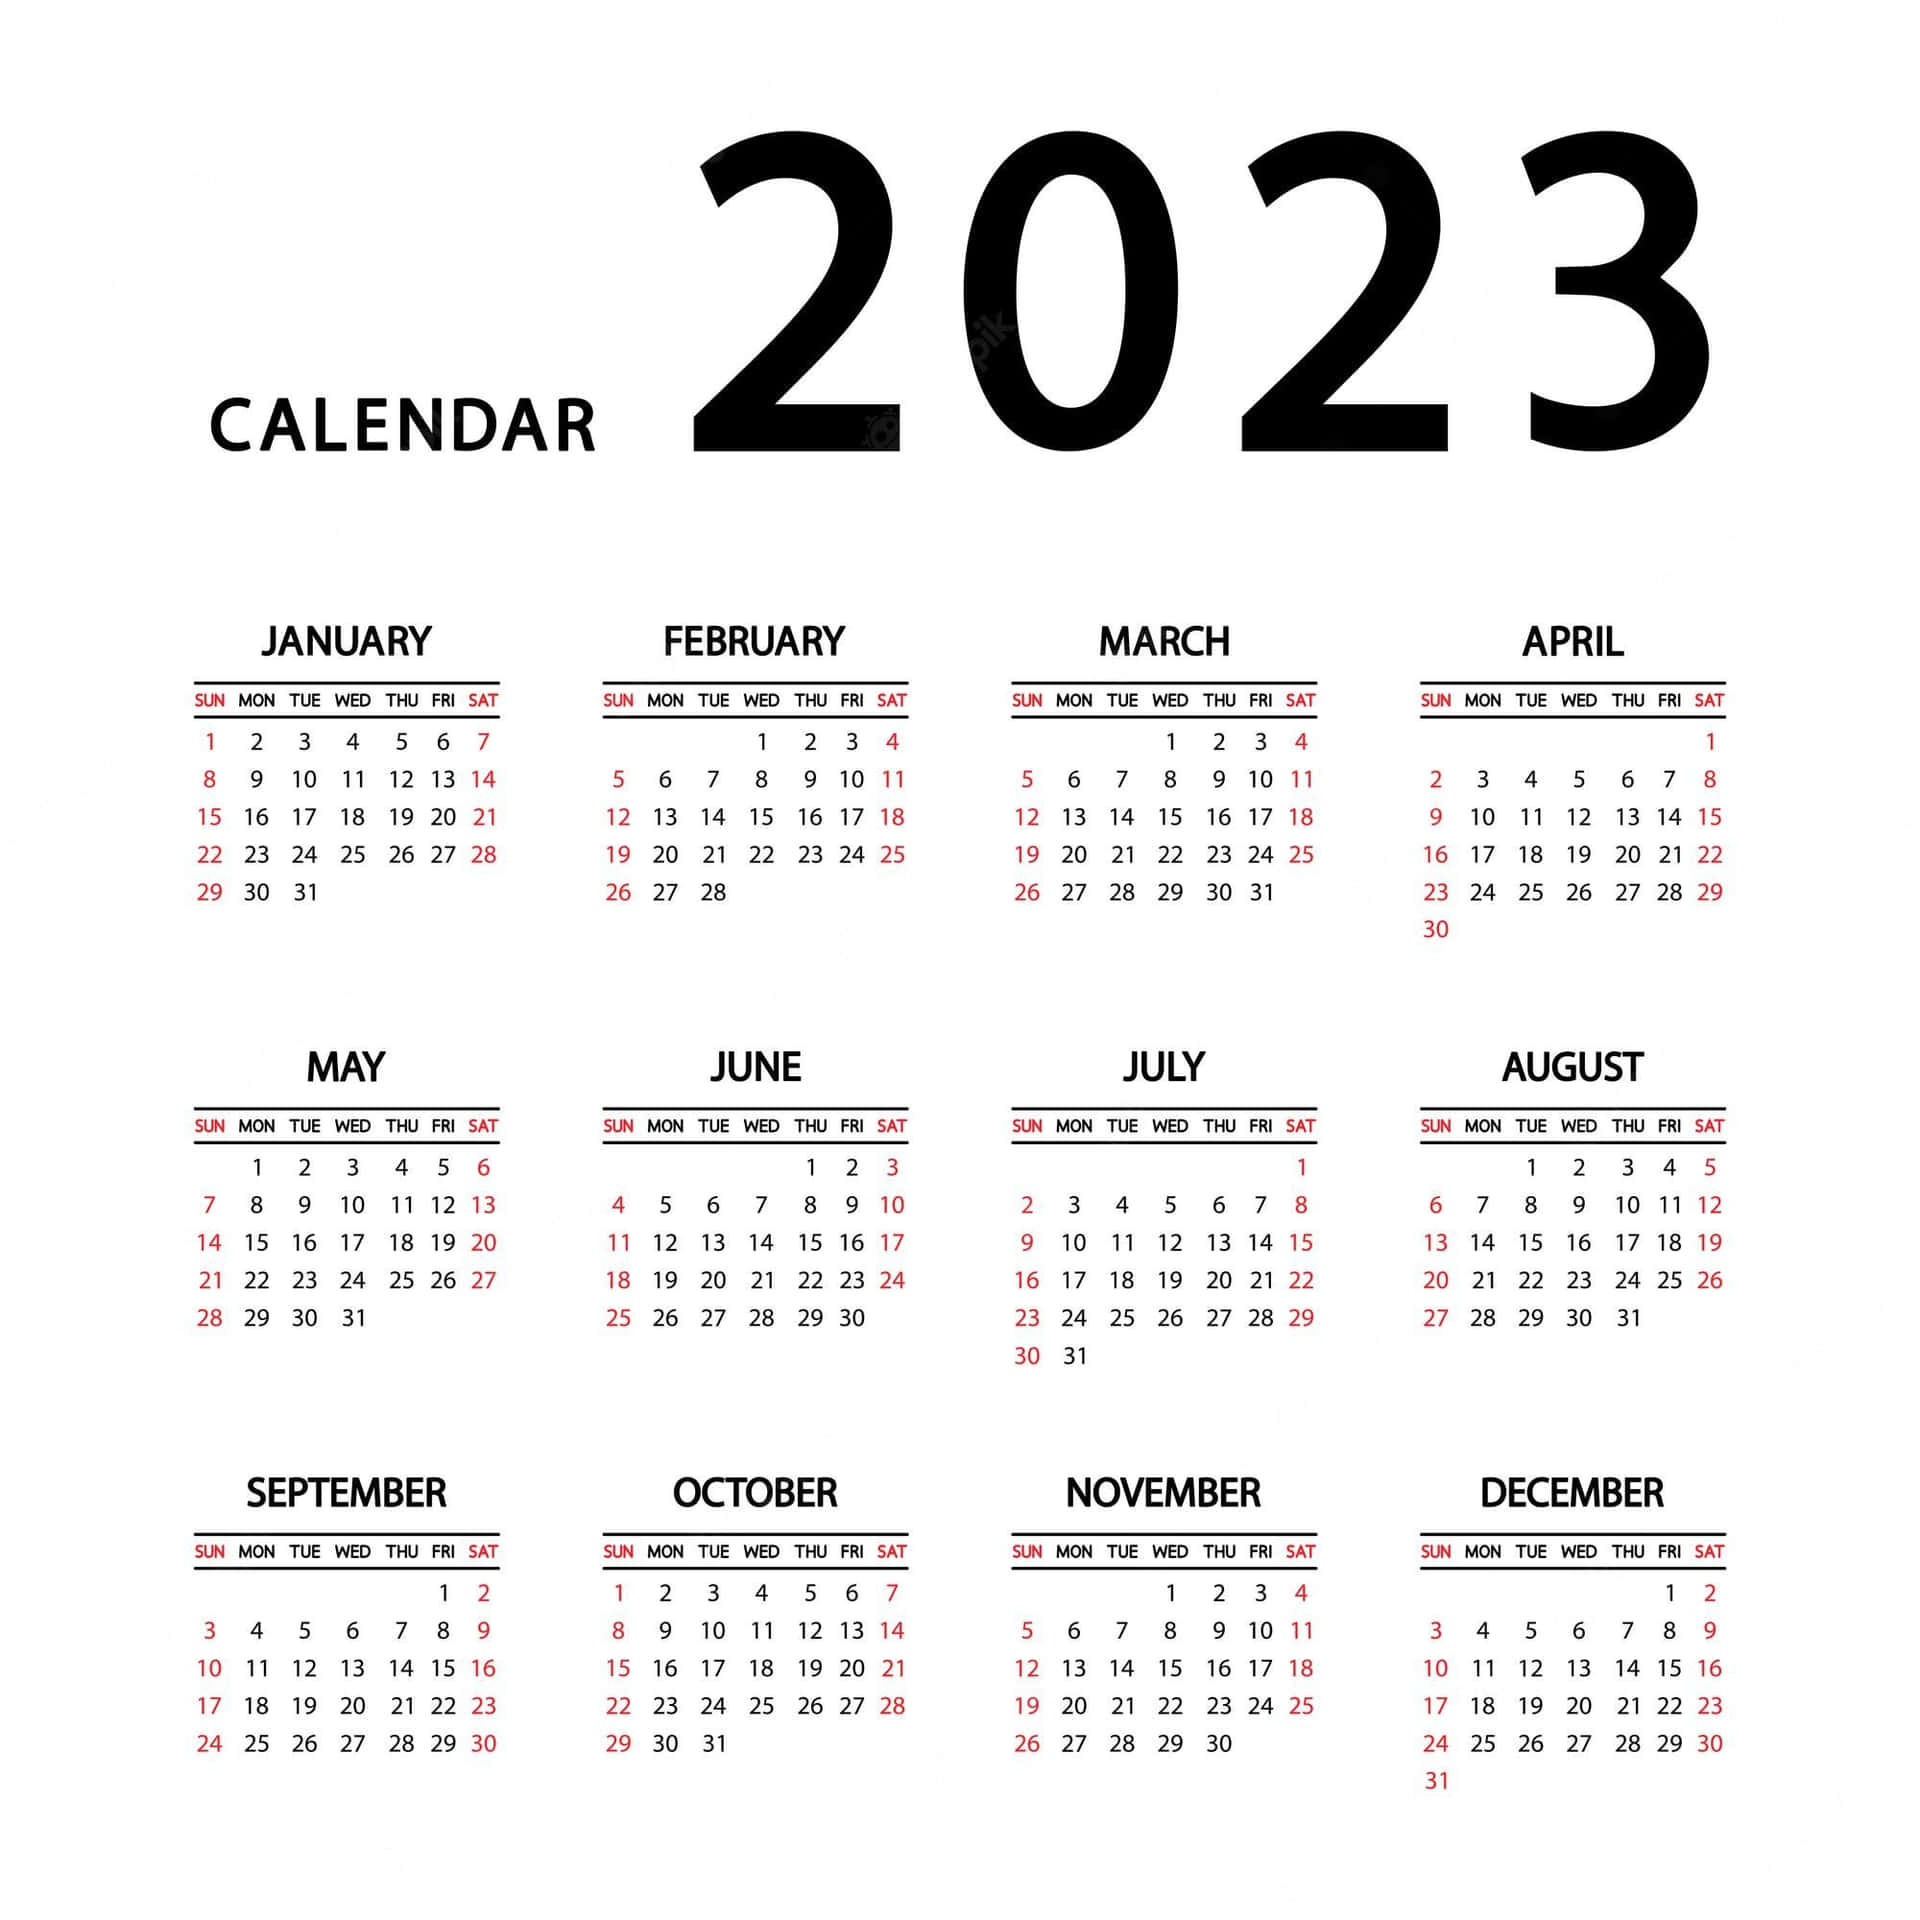 Annual Calendar 2023 Wallpaper